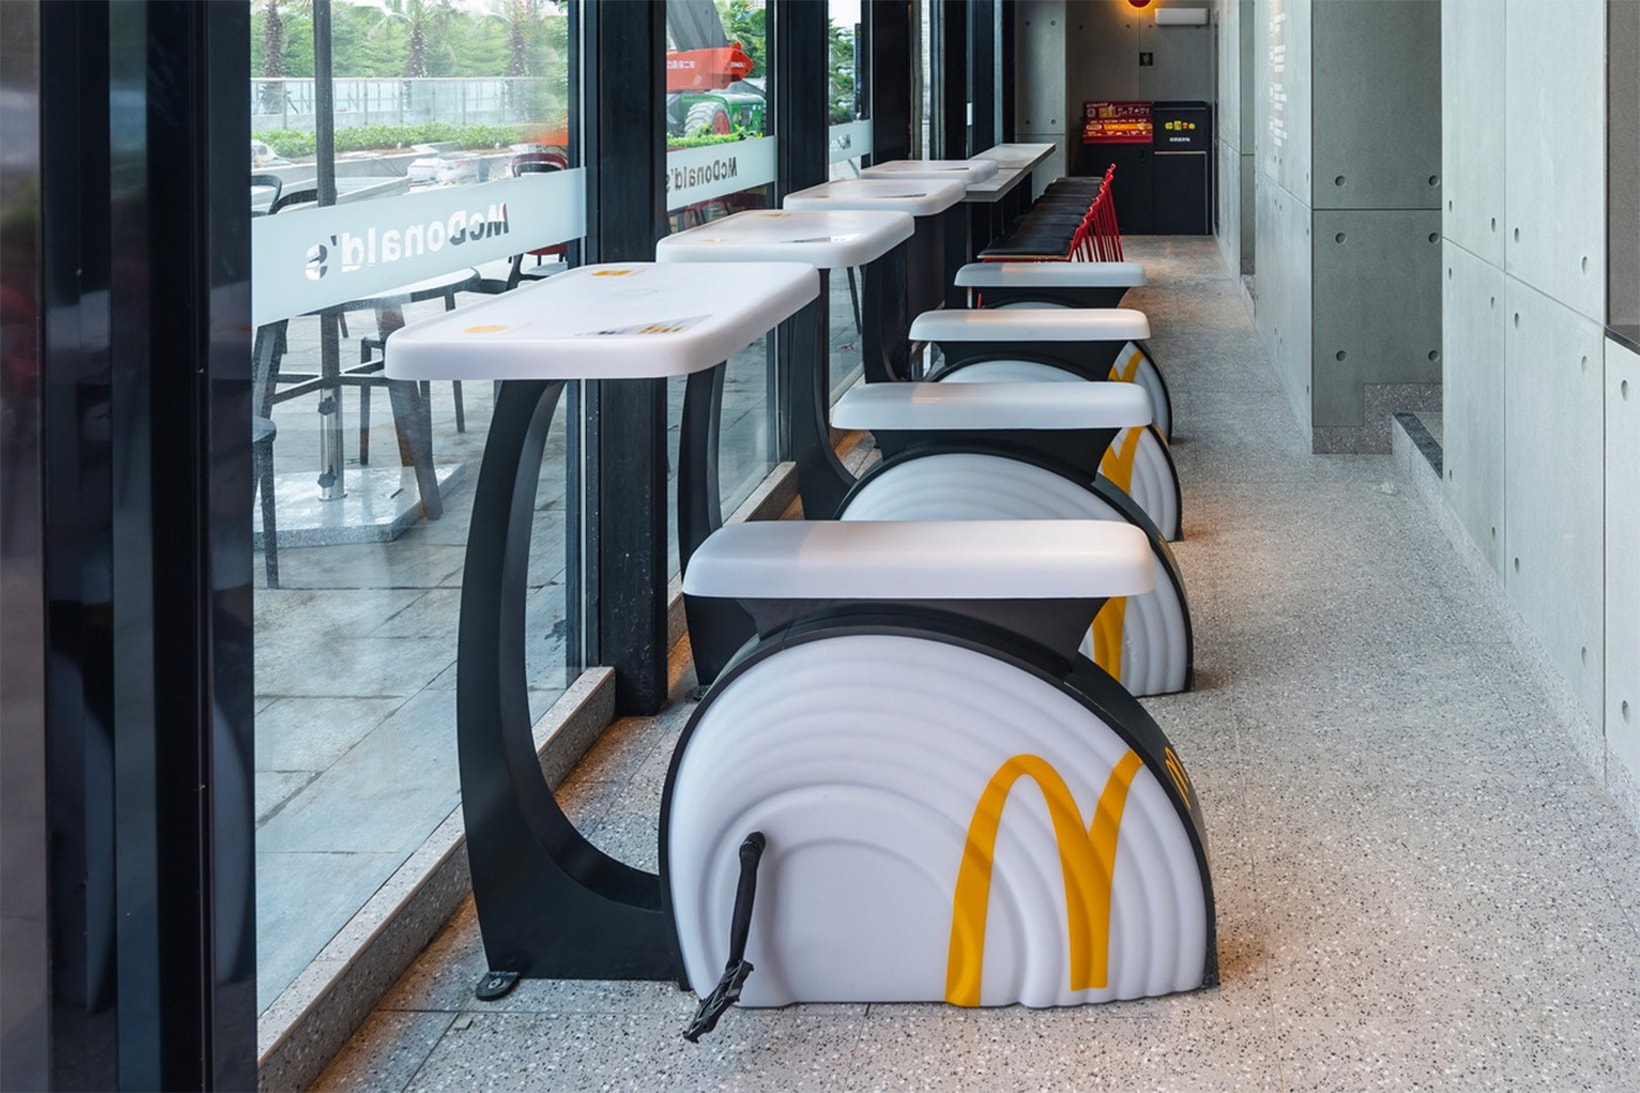 McDonald’s Exercise Bikes China Viral Video Fast Food Interior View